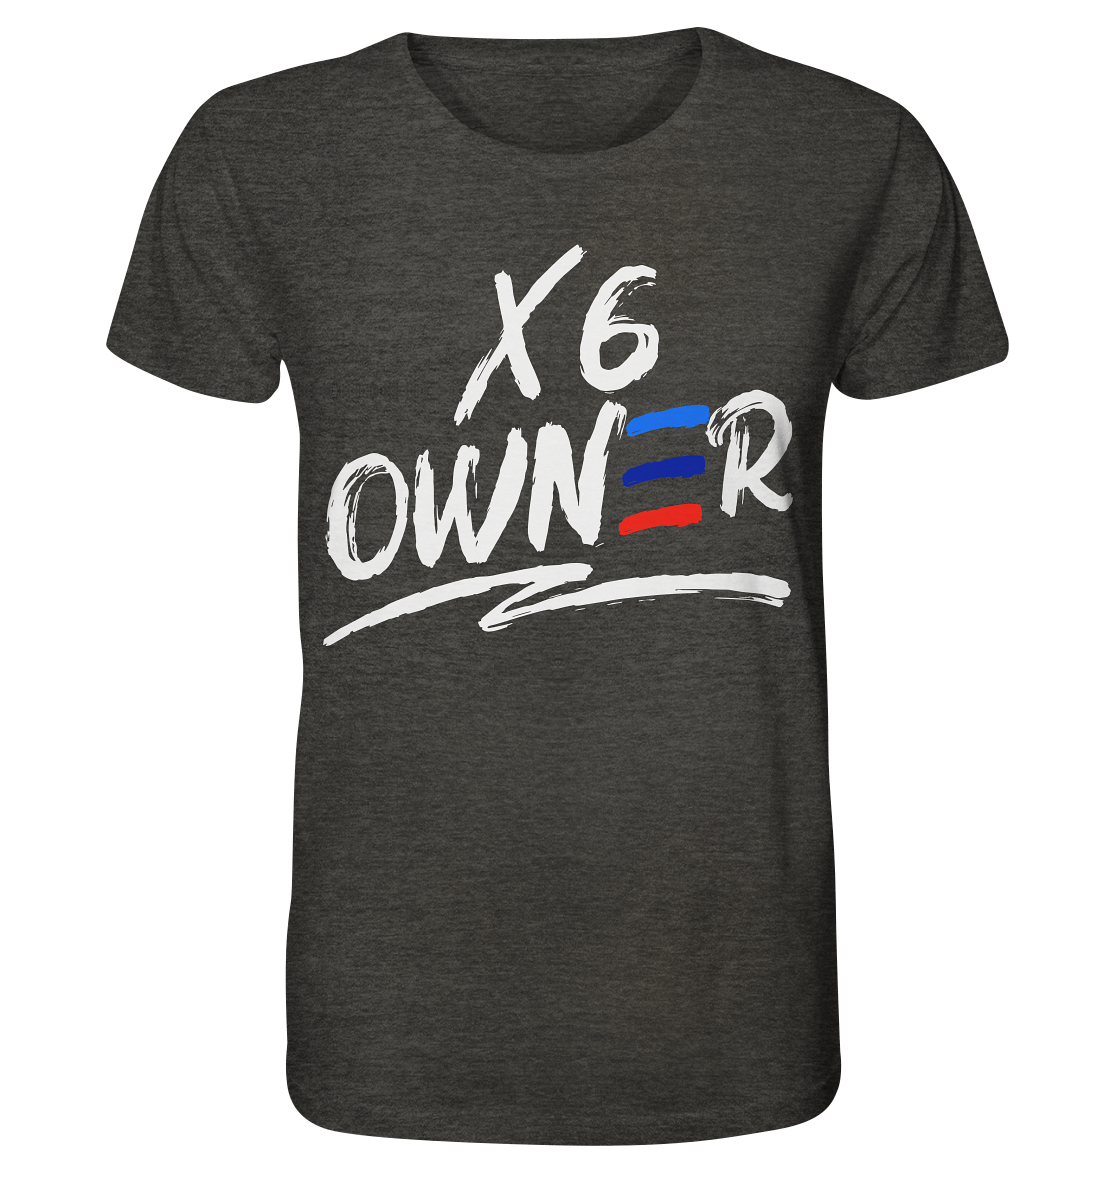 COD_BGKX6OWNER - Organic Shirt (meliert)